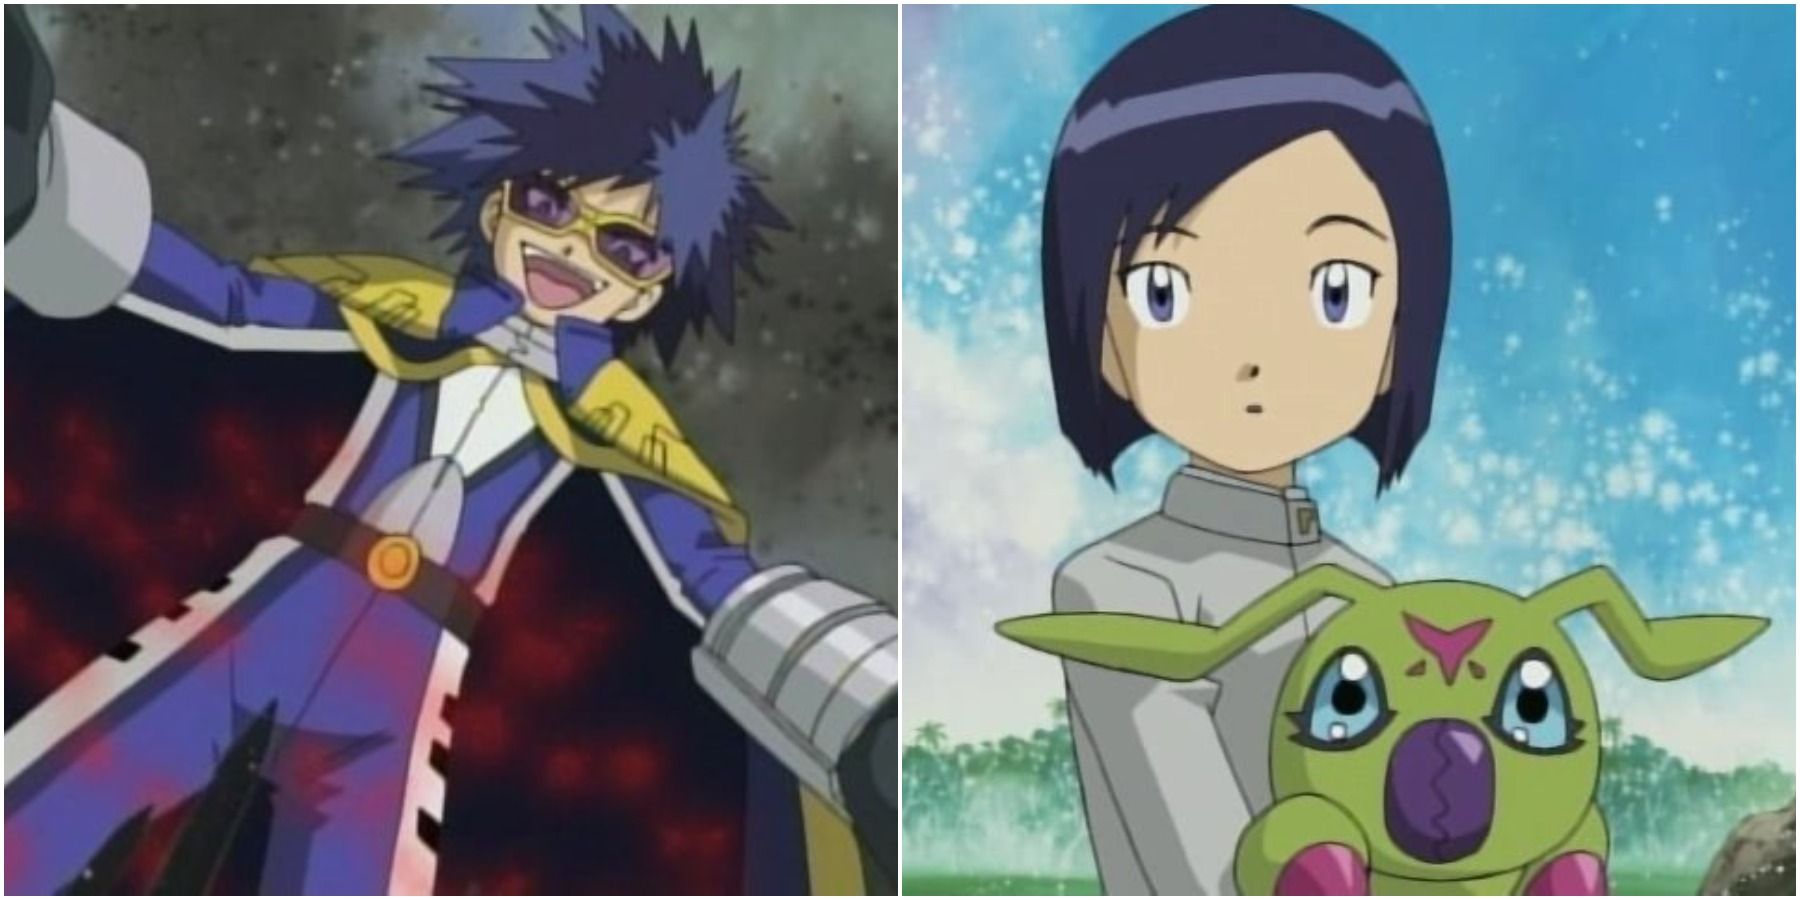 Ken Ichijouji Digimon Emperor Digimon season 2 anime